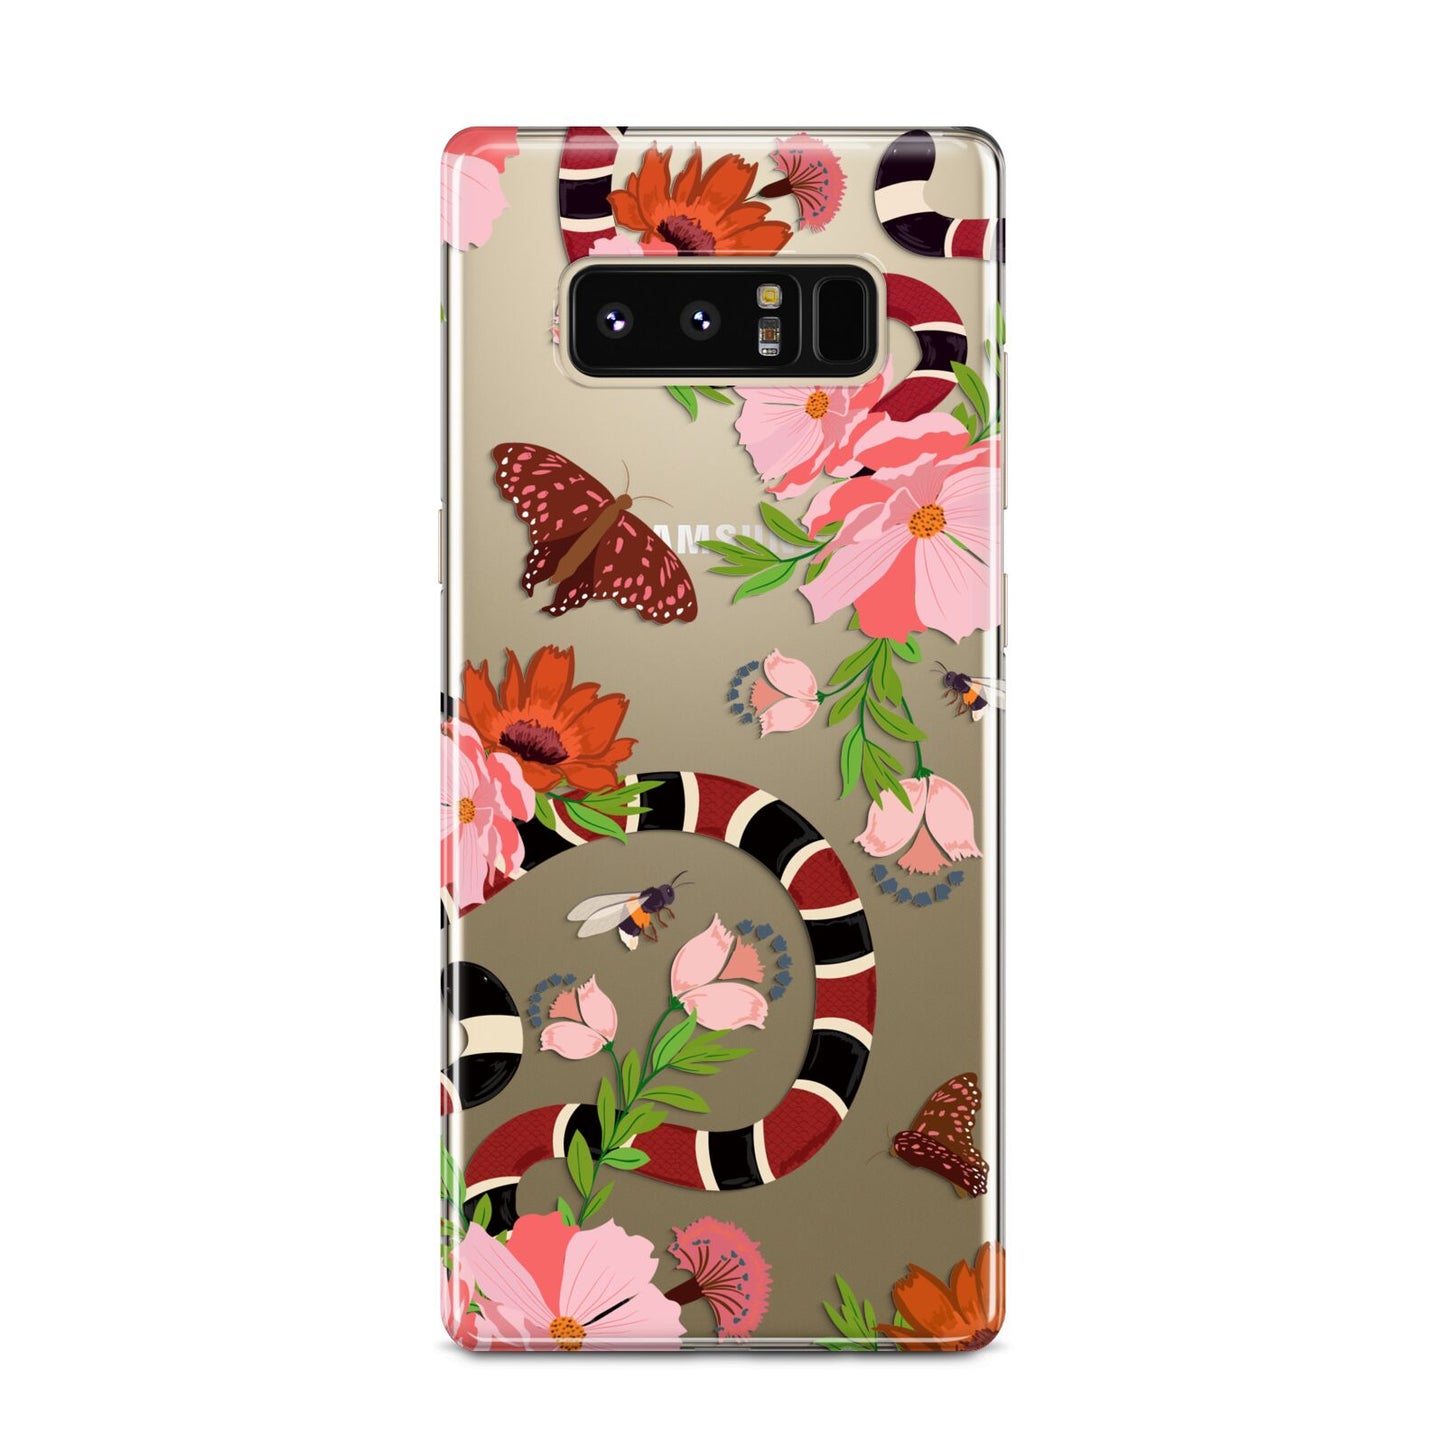 Floral Snake Samsung Galaxy Note 8 Case